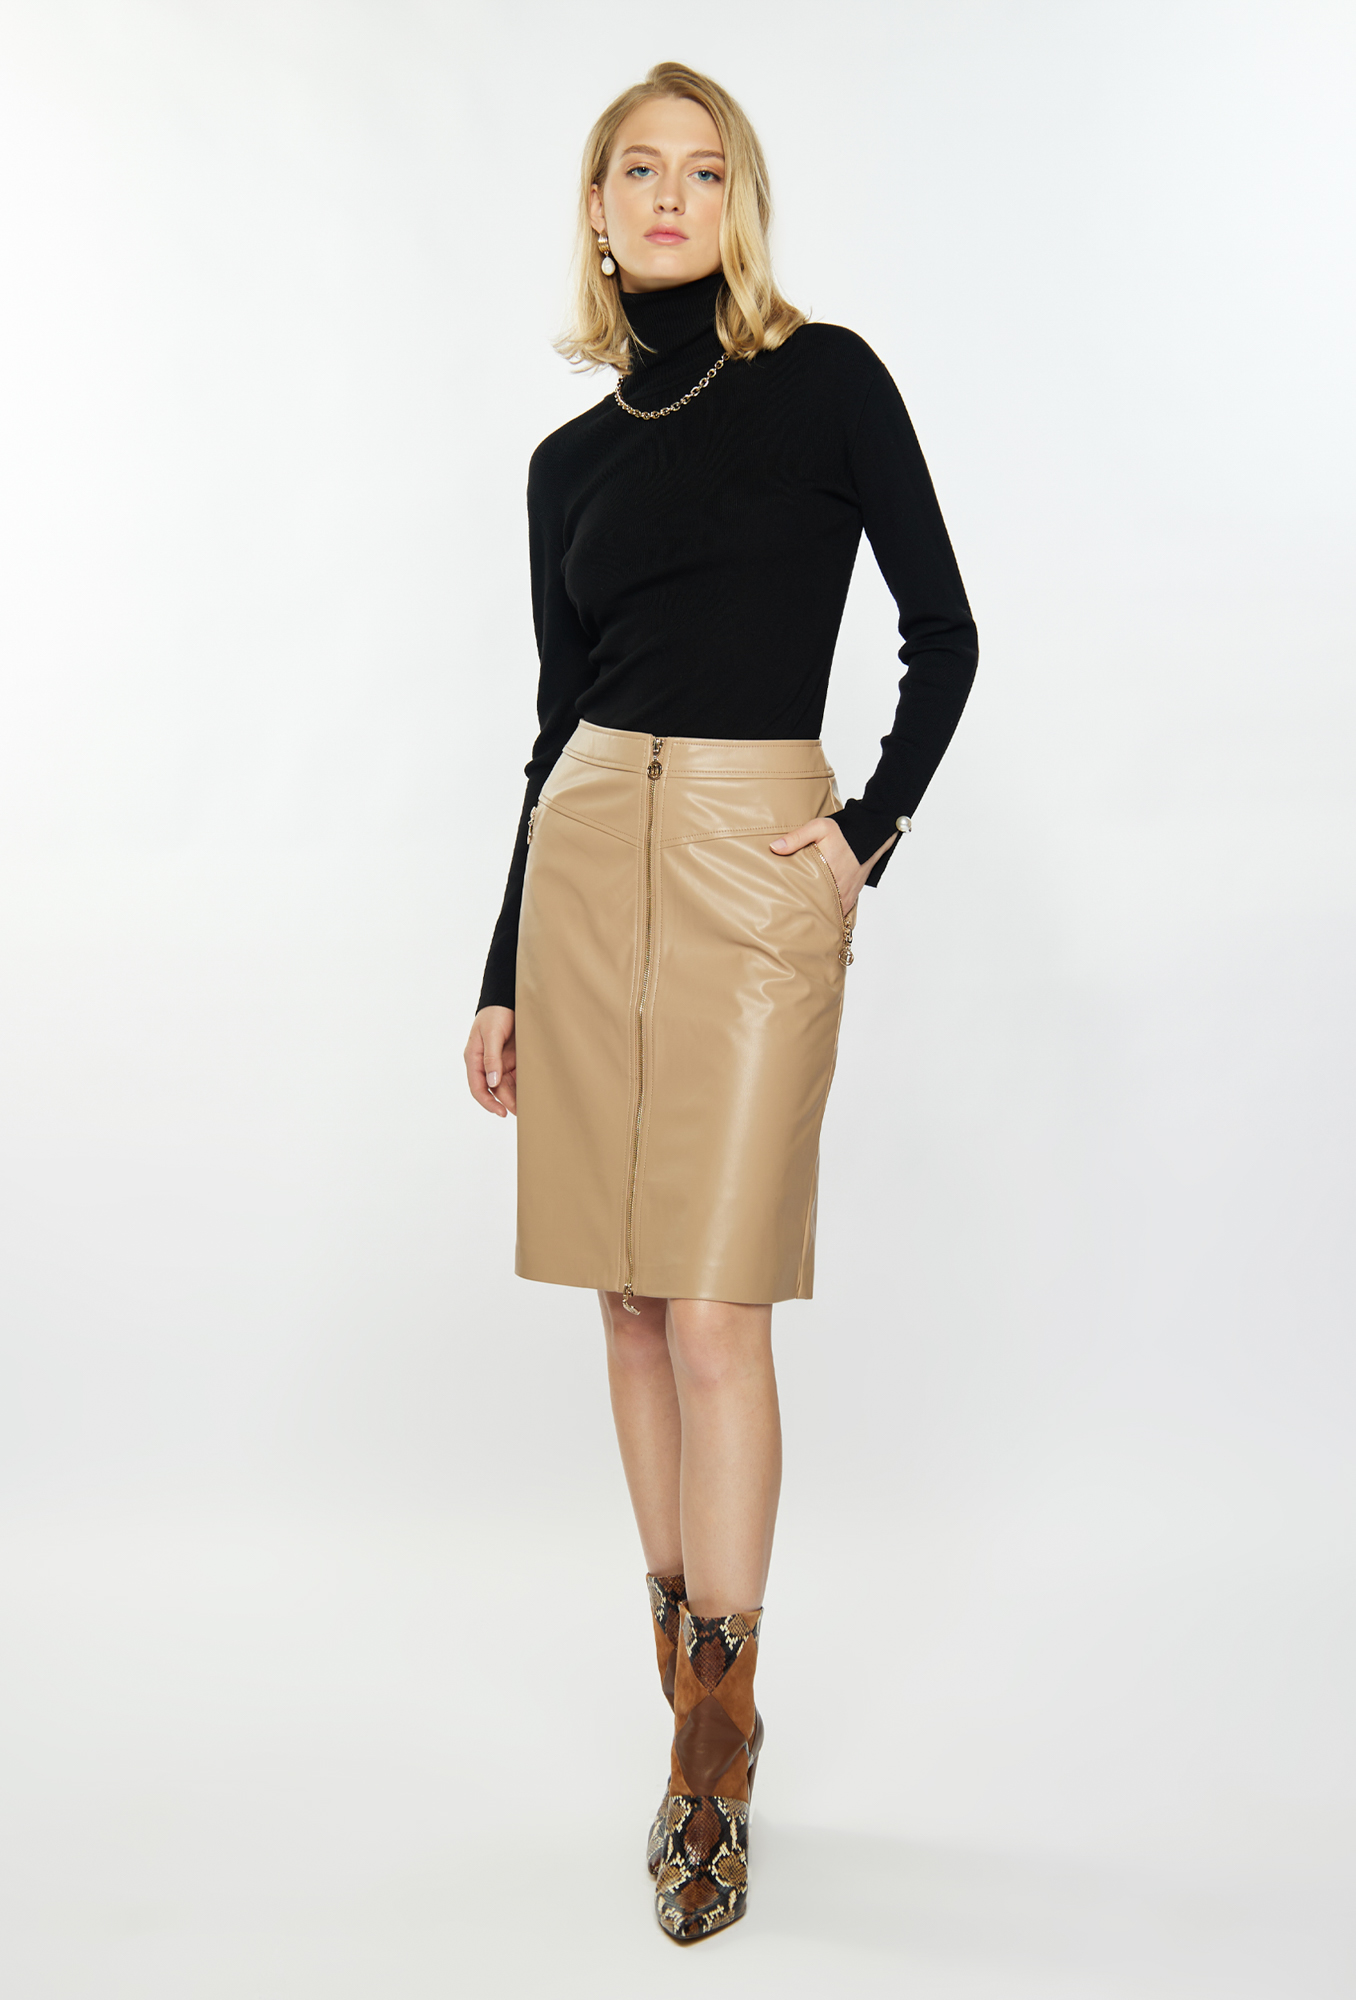 MONNARI Woman's Skirts Pencil Skirt With Zipper